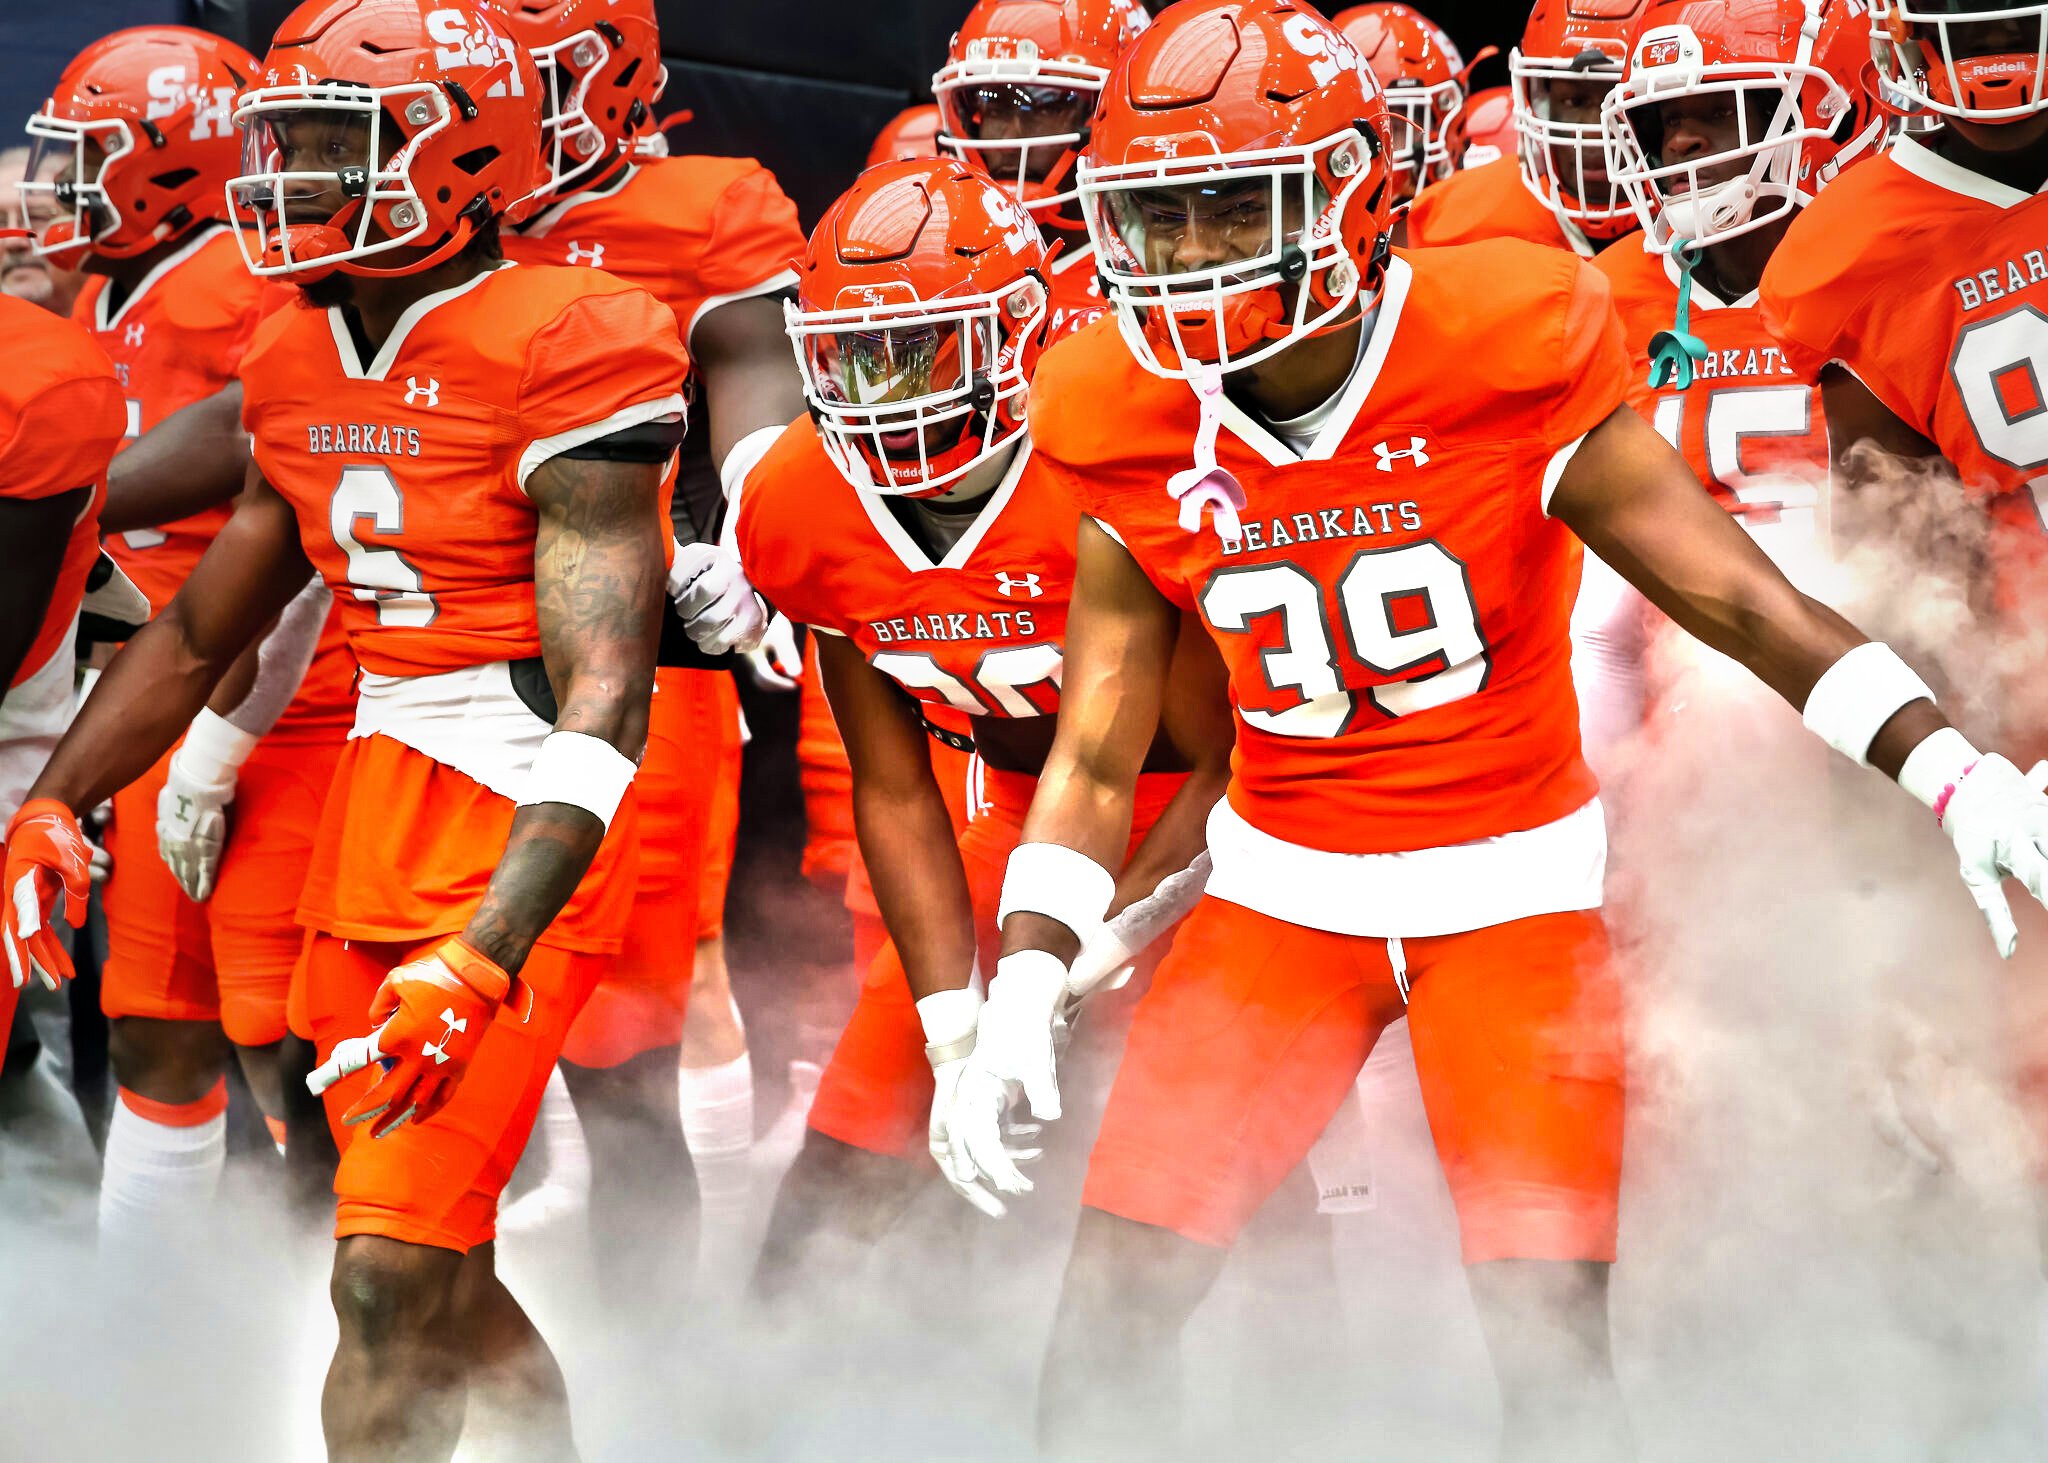 Football players dressed in orange uniforms walking through fog.